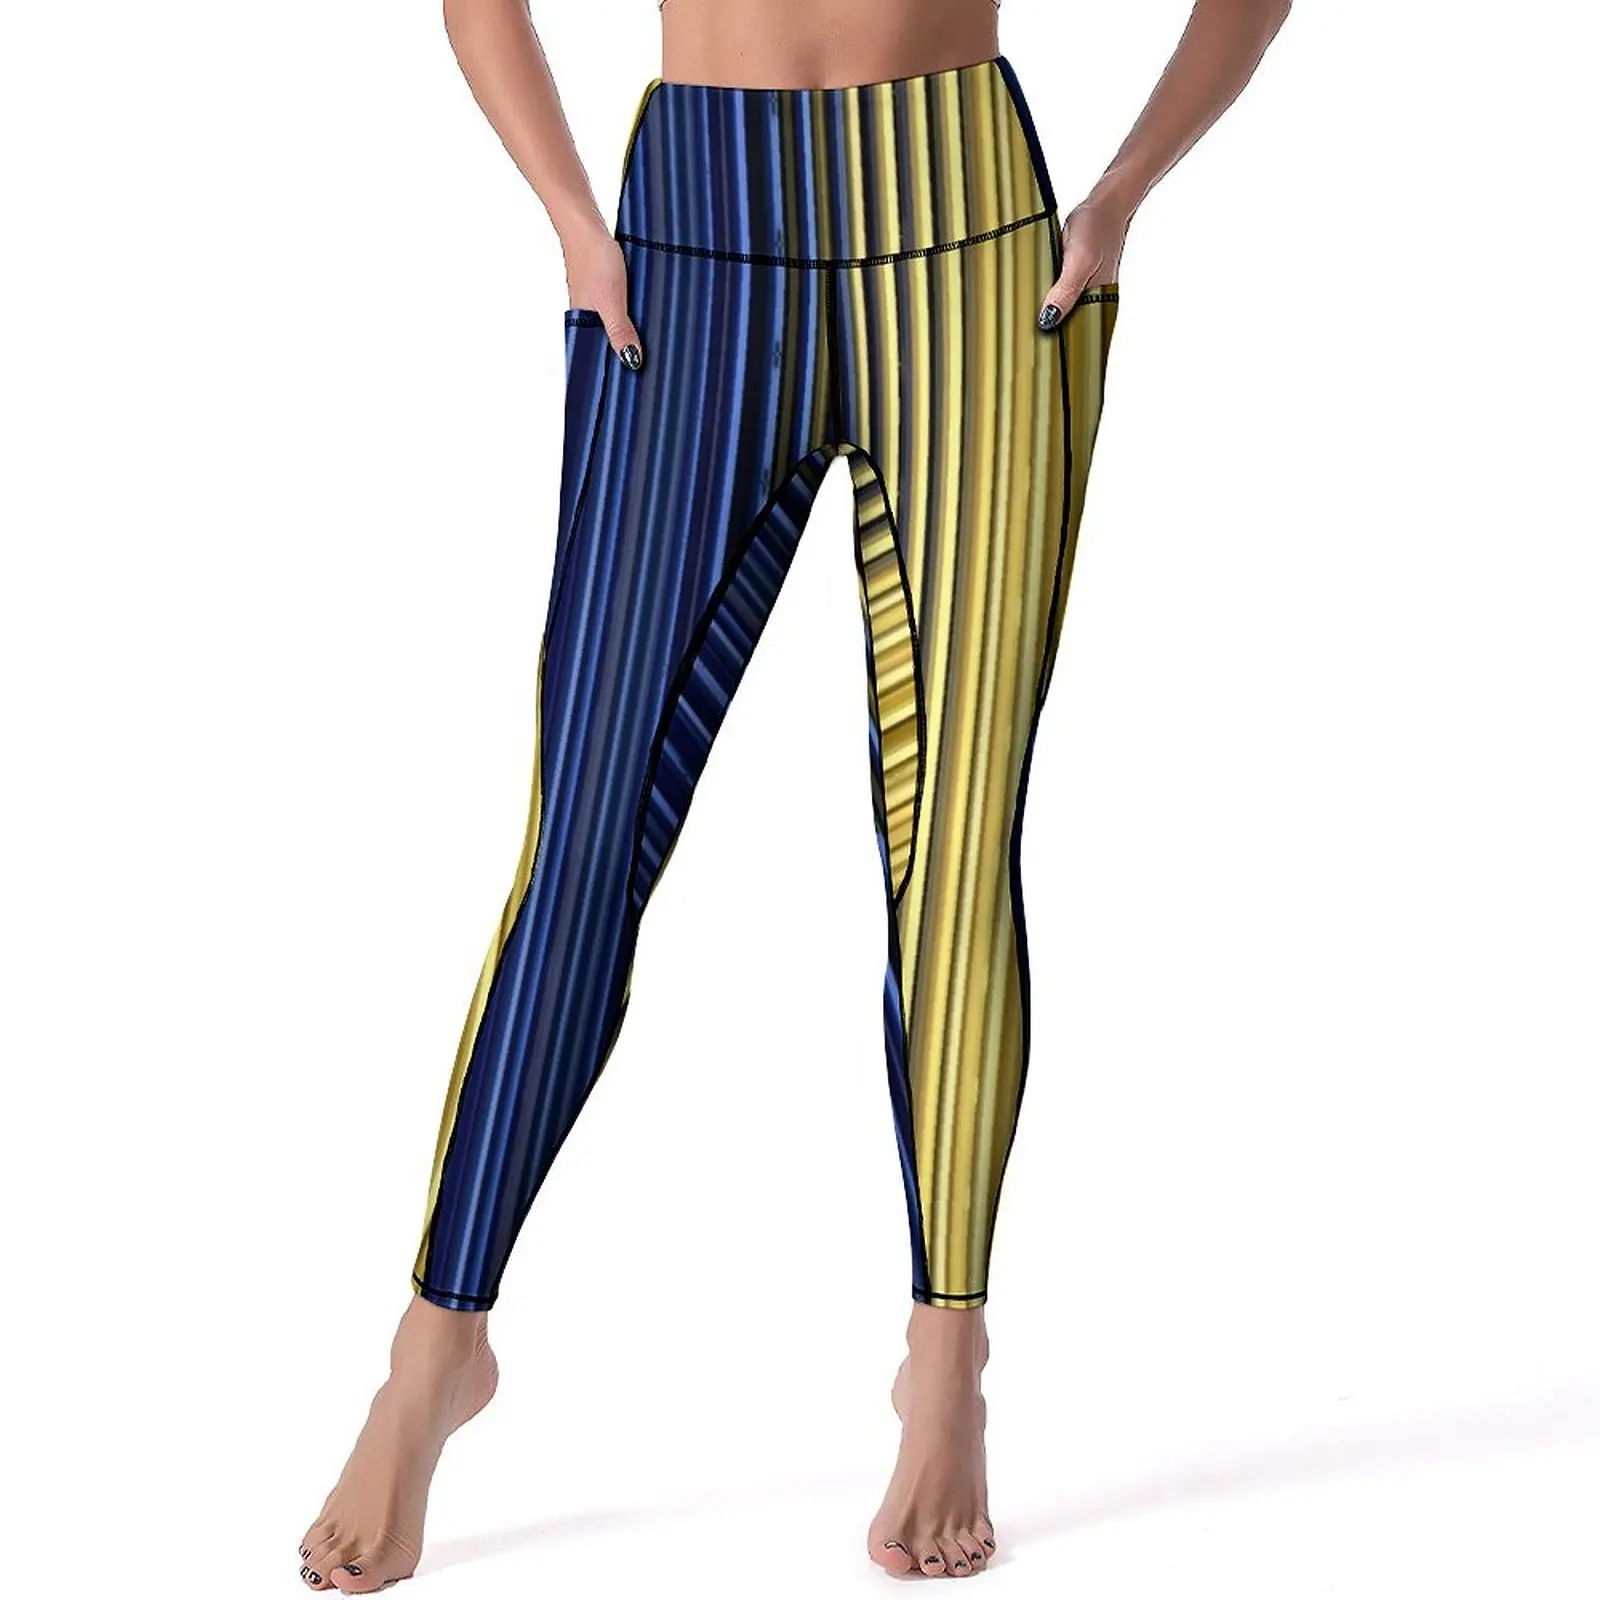 

Yellow Blue Striped Leggings Two Tone Fitness Yoga Pants High Waist Funny Leggins Quick-Dry Graphic Sport Legging Gift Idea